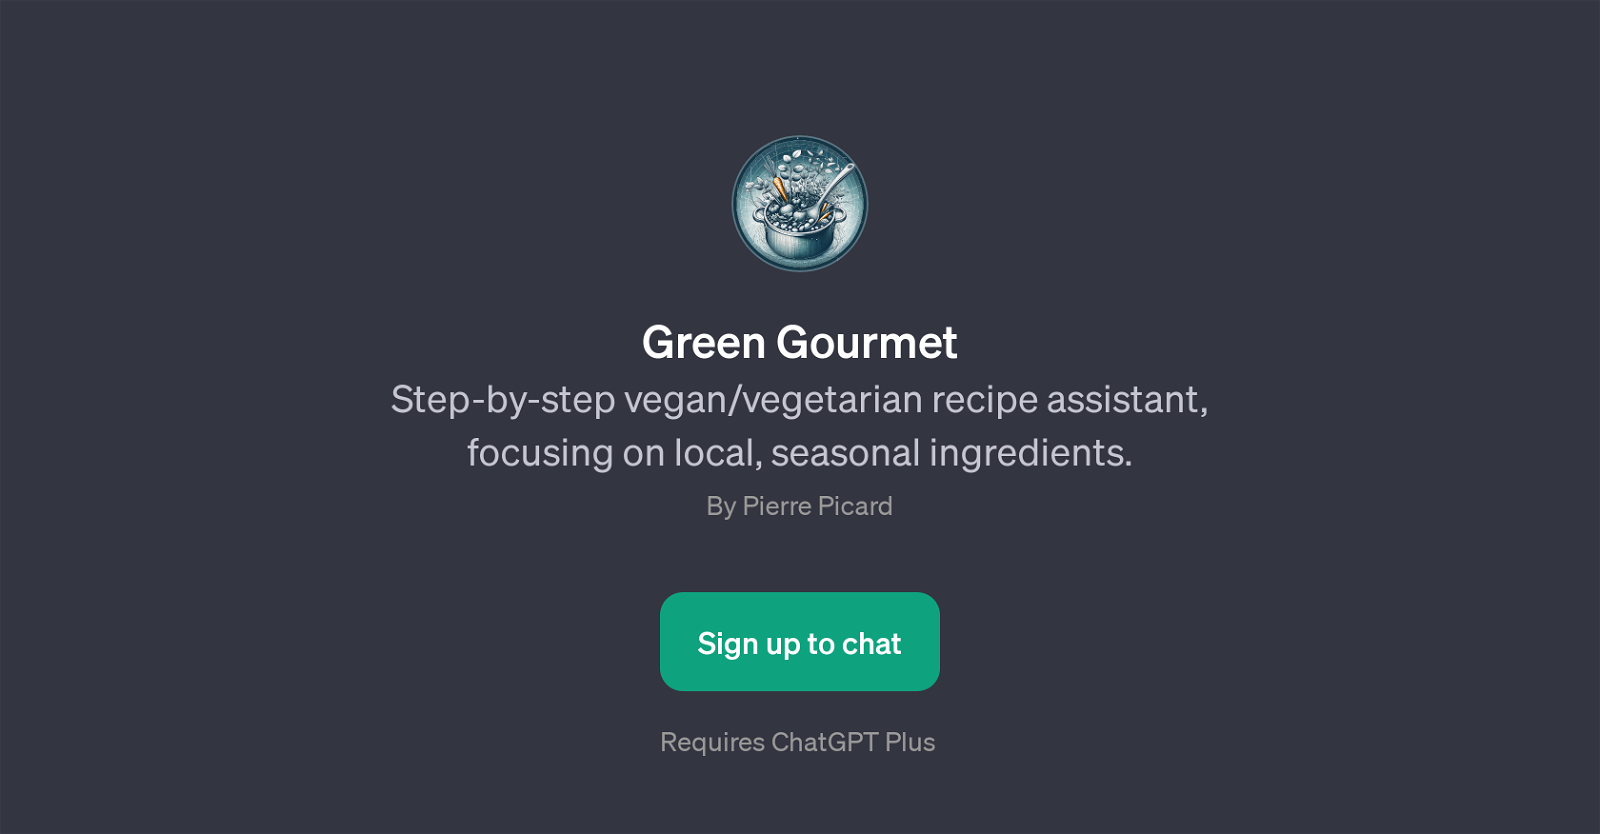 Green Gourmet website